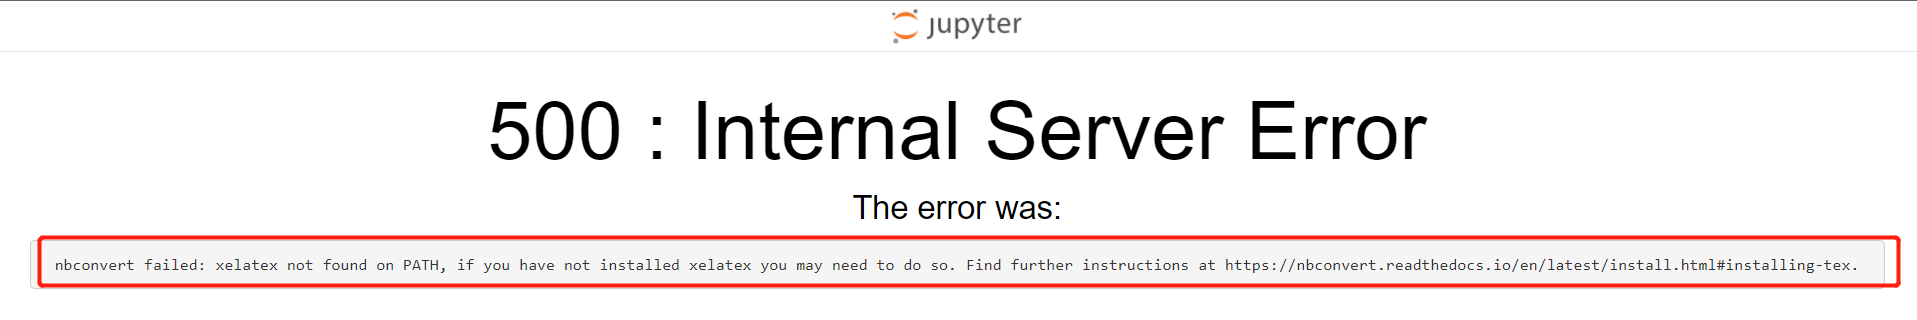 jupyter lab 导出笔记为pdf